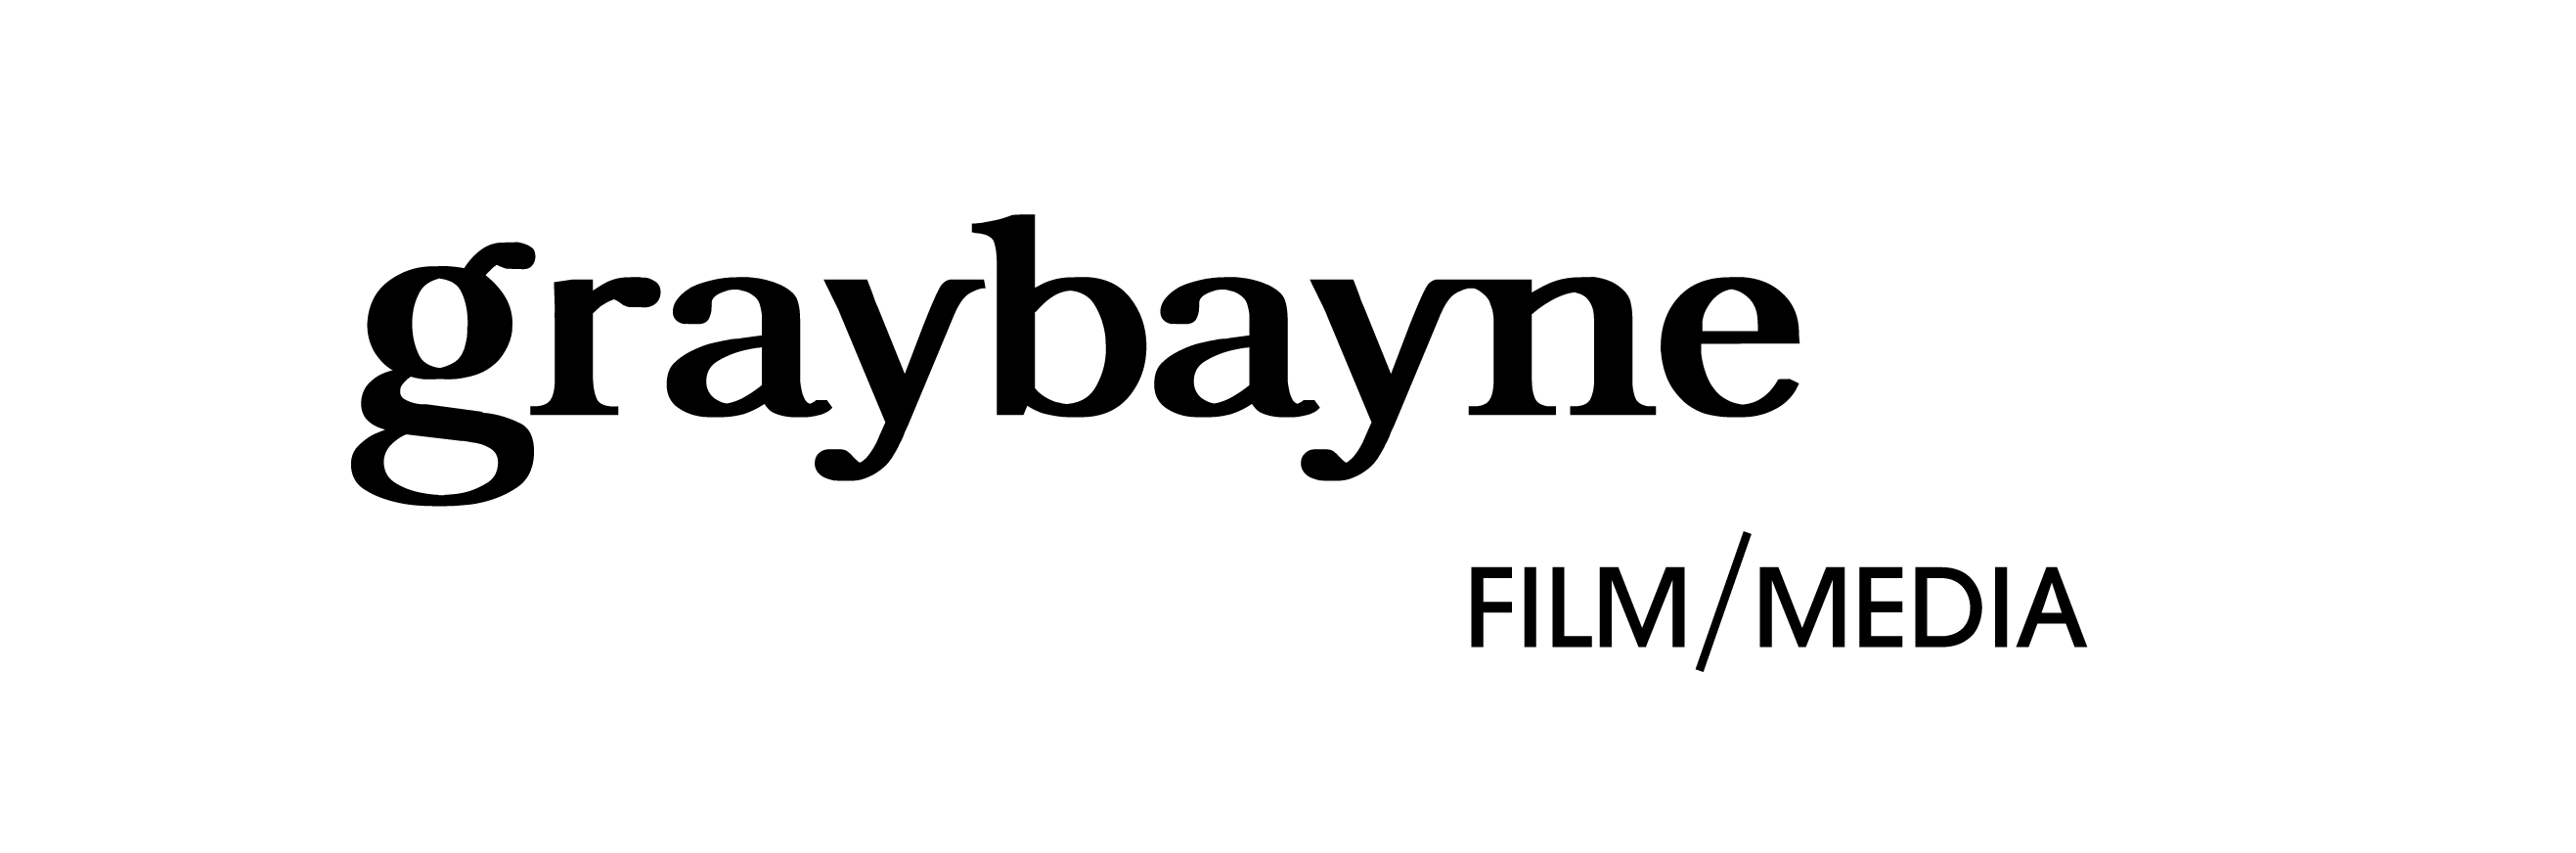 graybayne film/media Logo